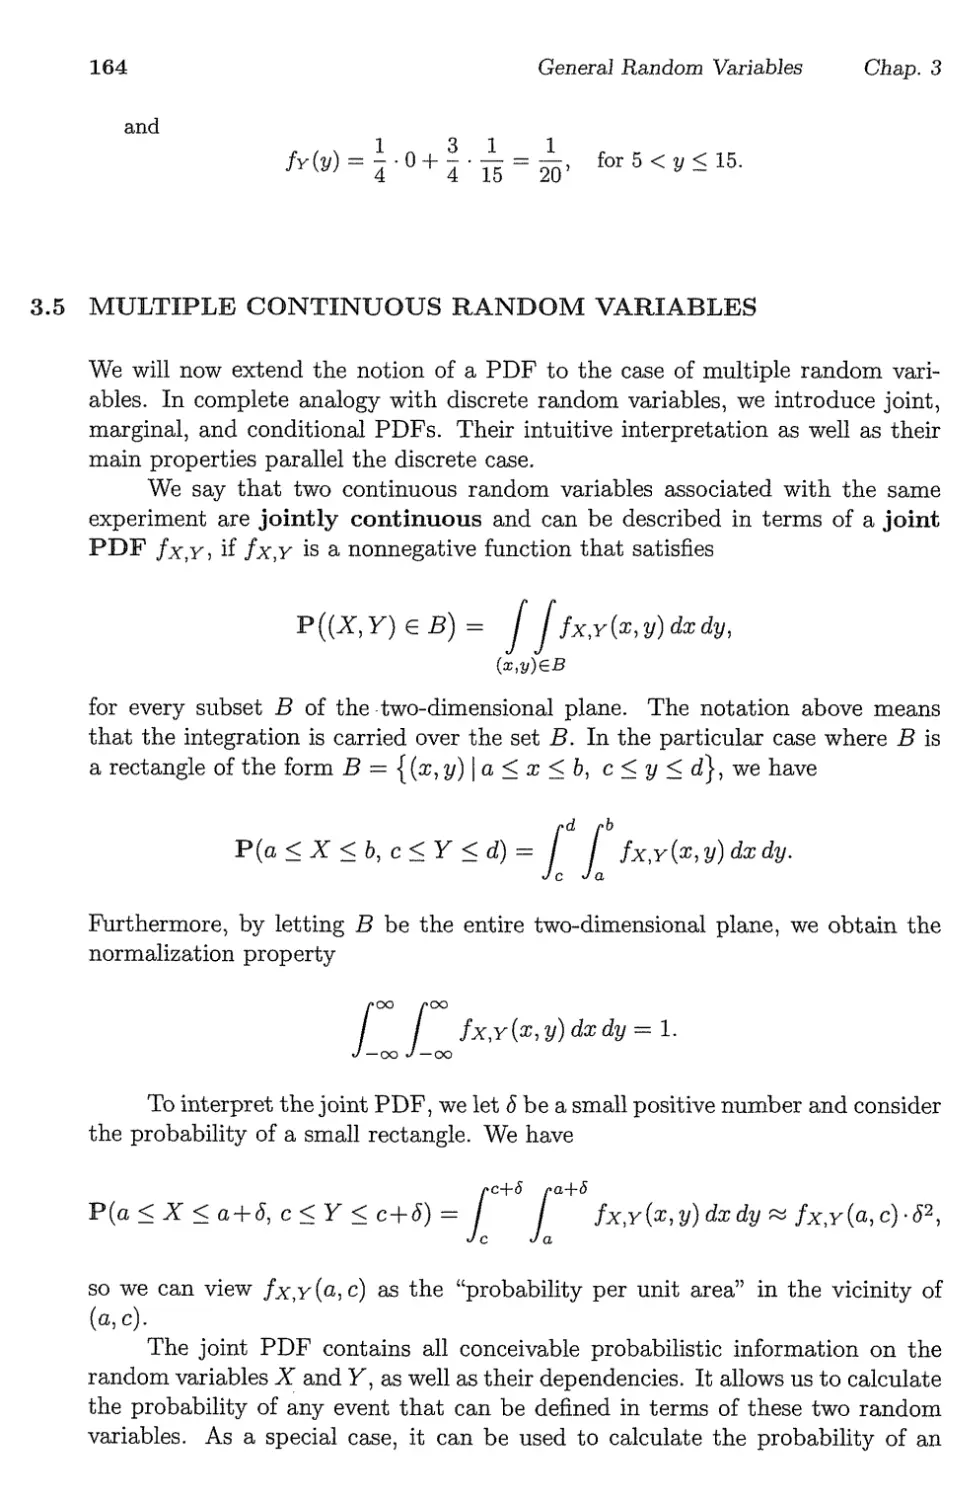 Multiple Continuous Random Variables